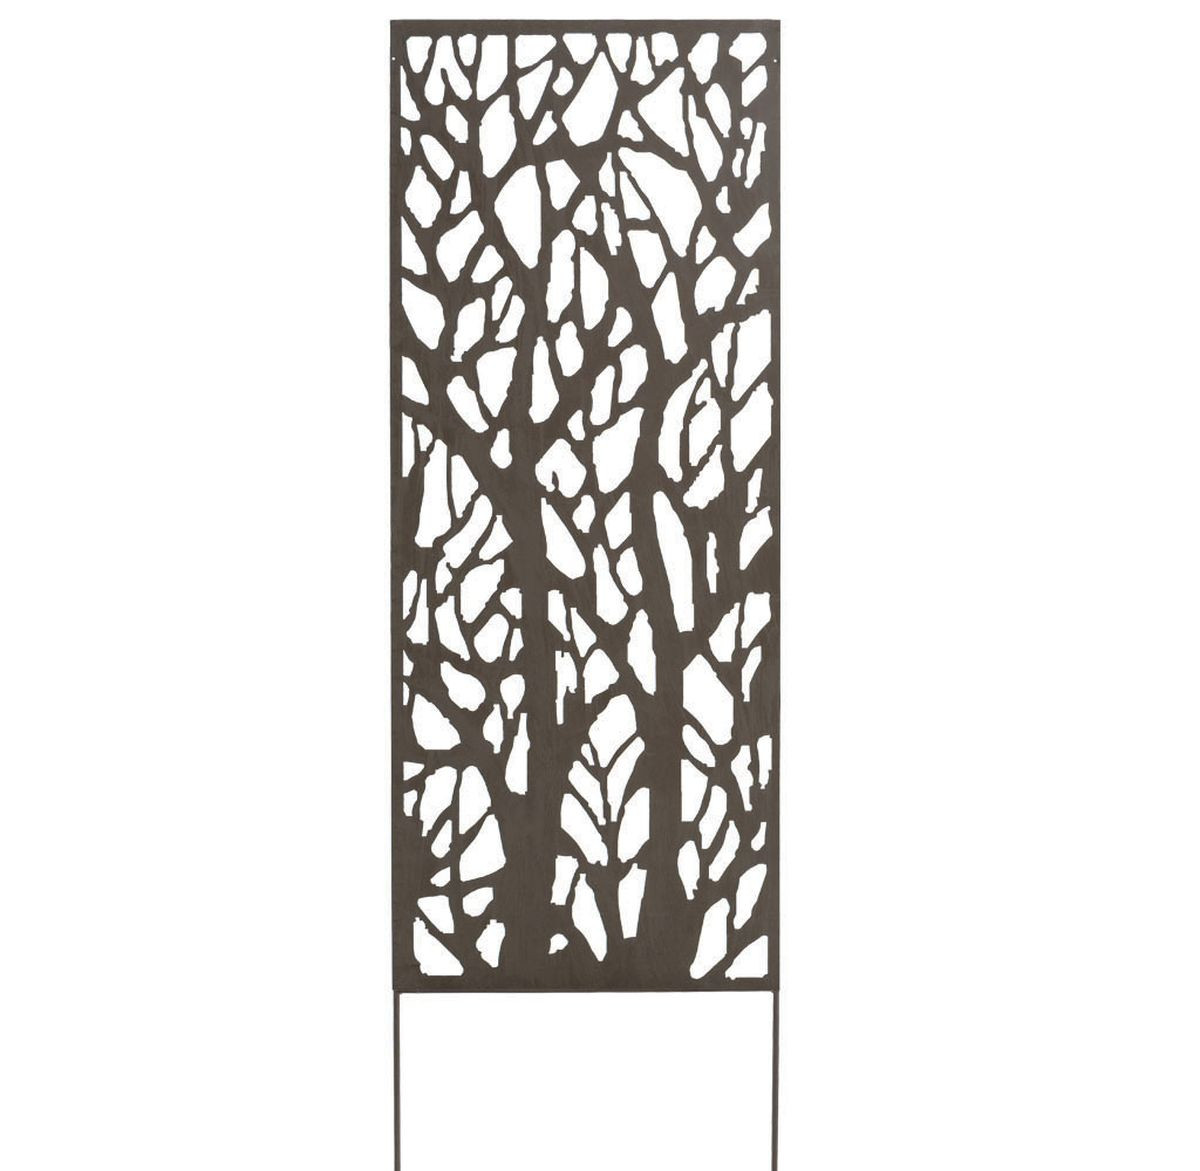 Panneau métal avec motifs décoratifs/Arbres - 0,60 x 1,50 m - Brun vieilli